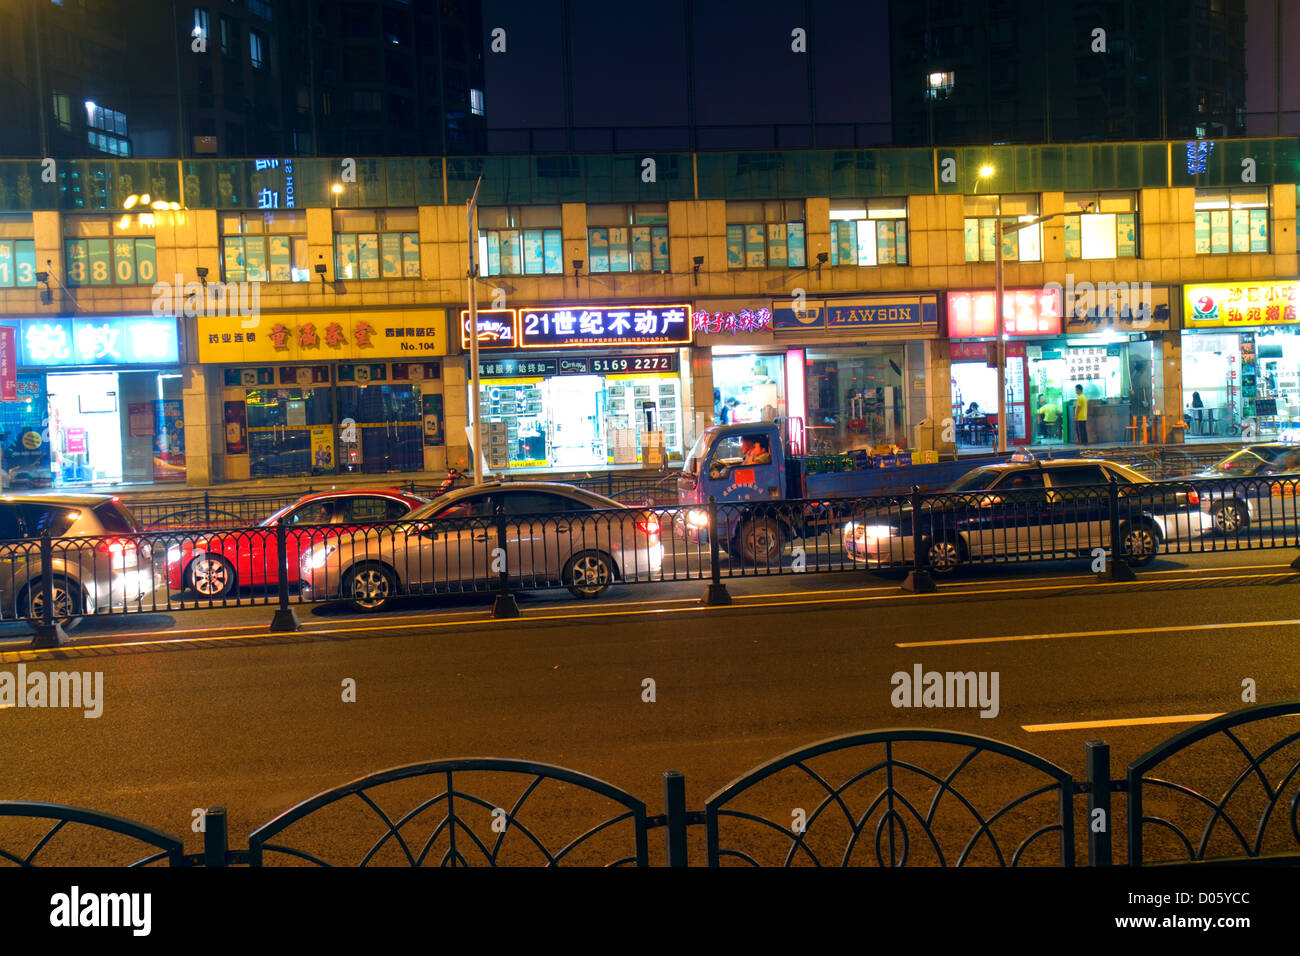 Shanghai China,Chinese Huangpu District,South Xizang Road,Mandarin,hanzi,characters,symbols,small businesses,district,traffic,night,China121006178 Stock Photo